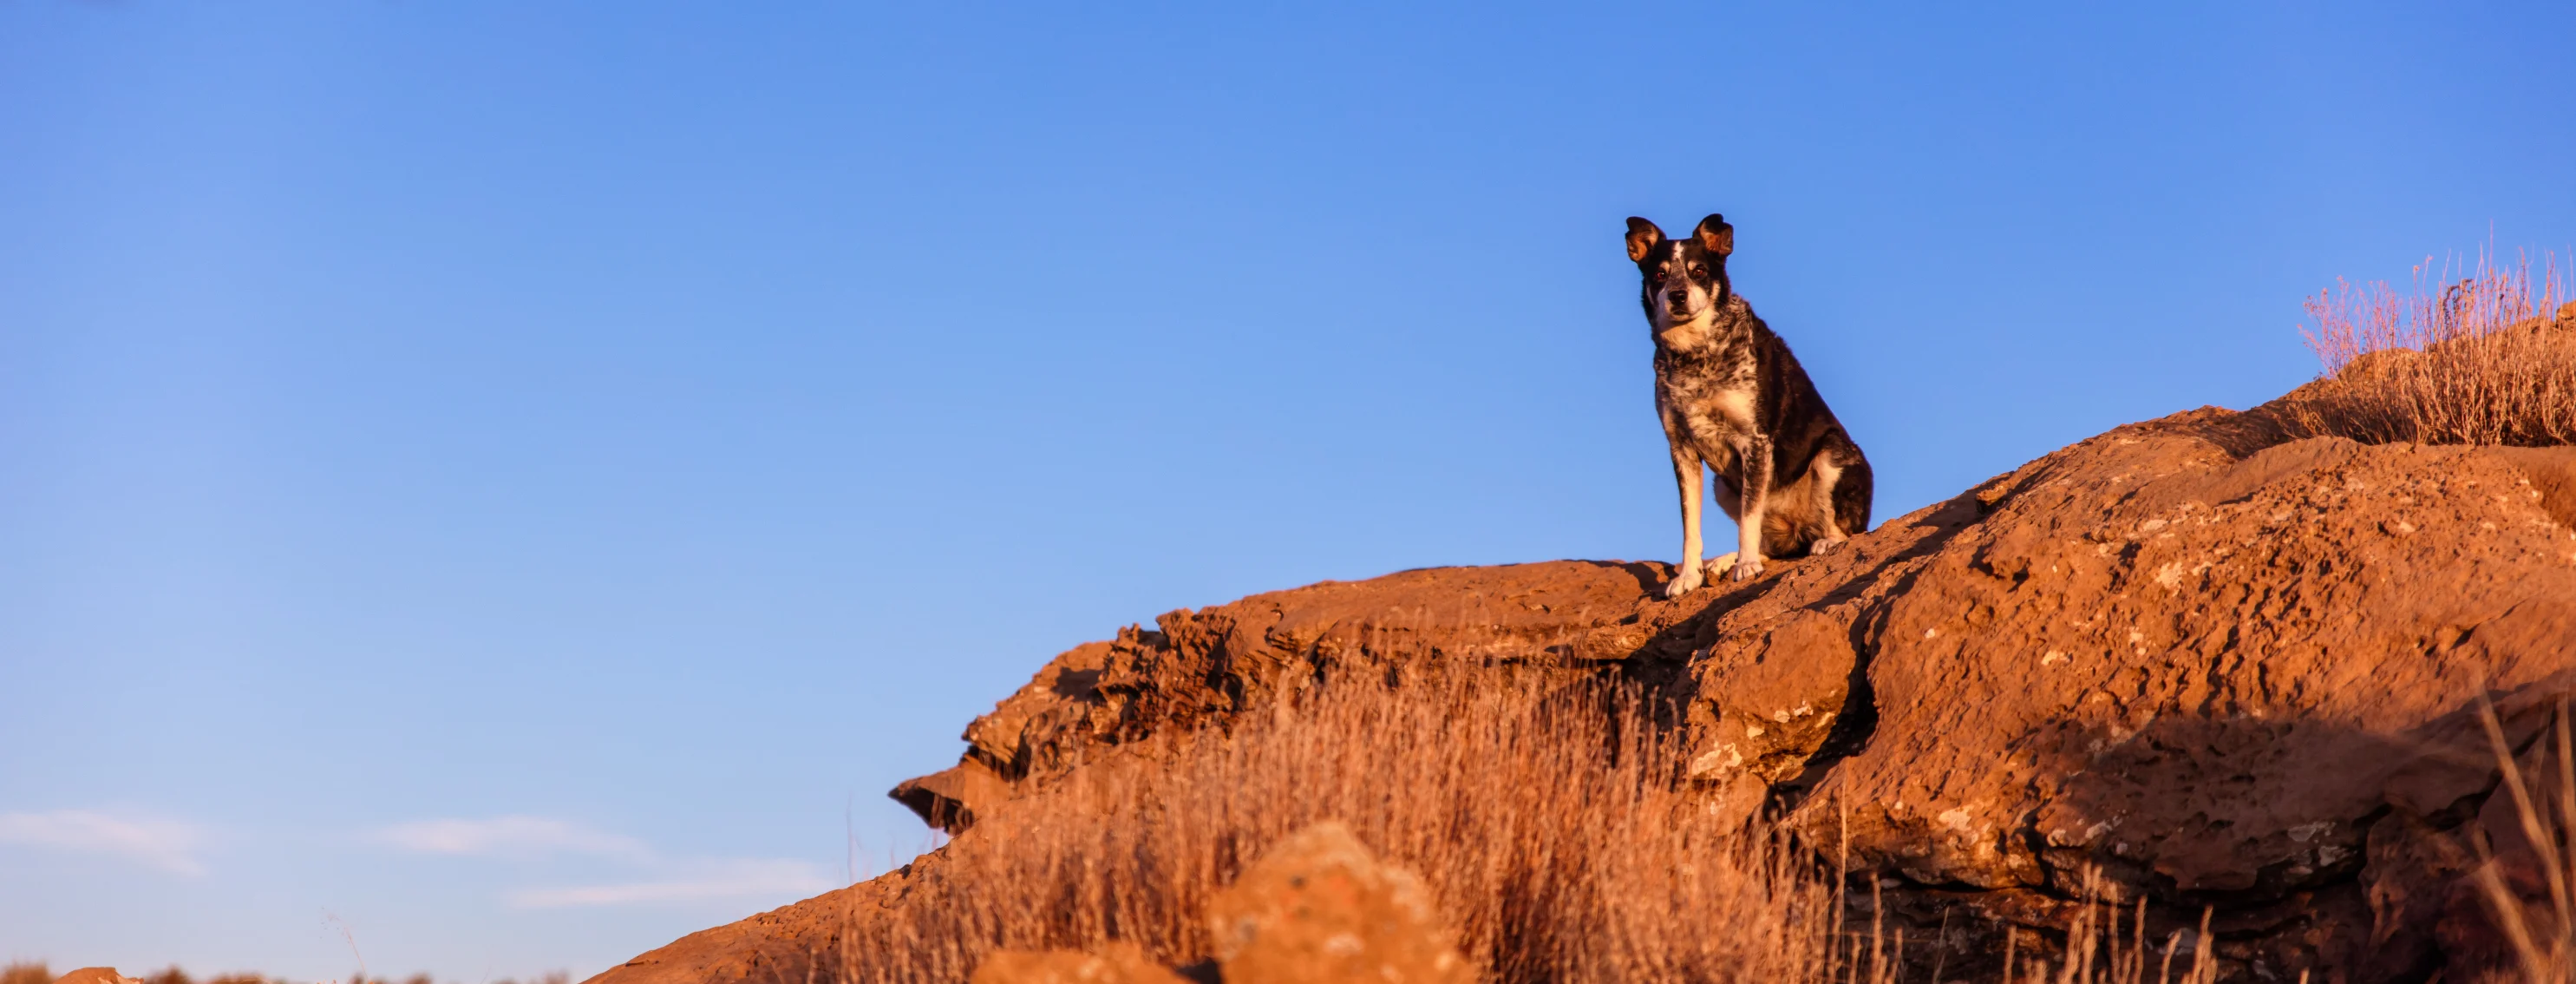 Dog sitting on rocks